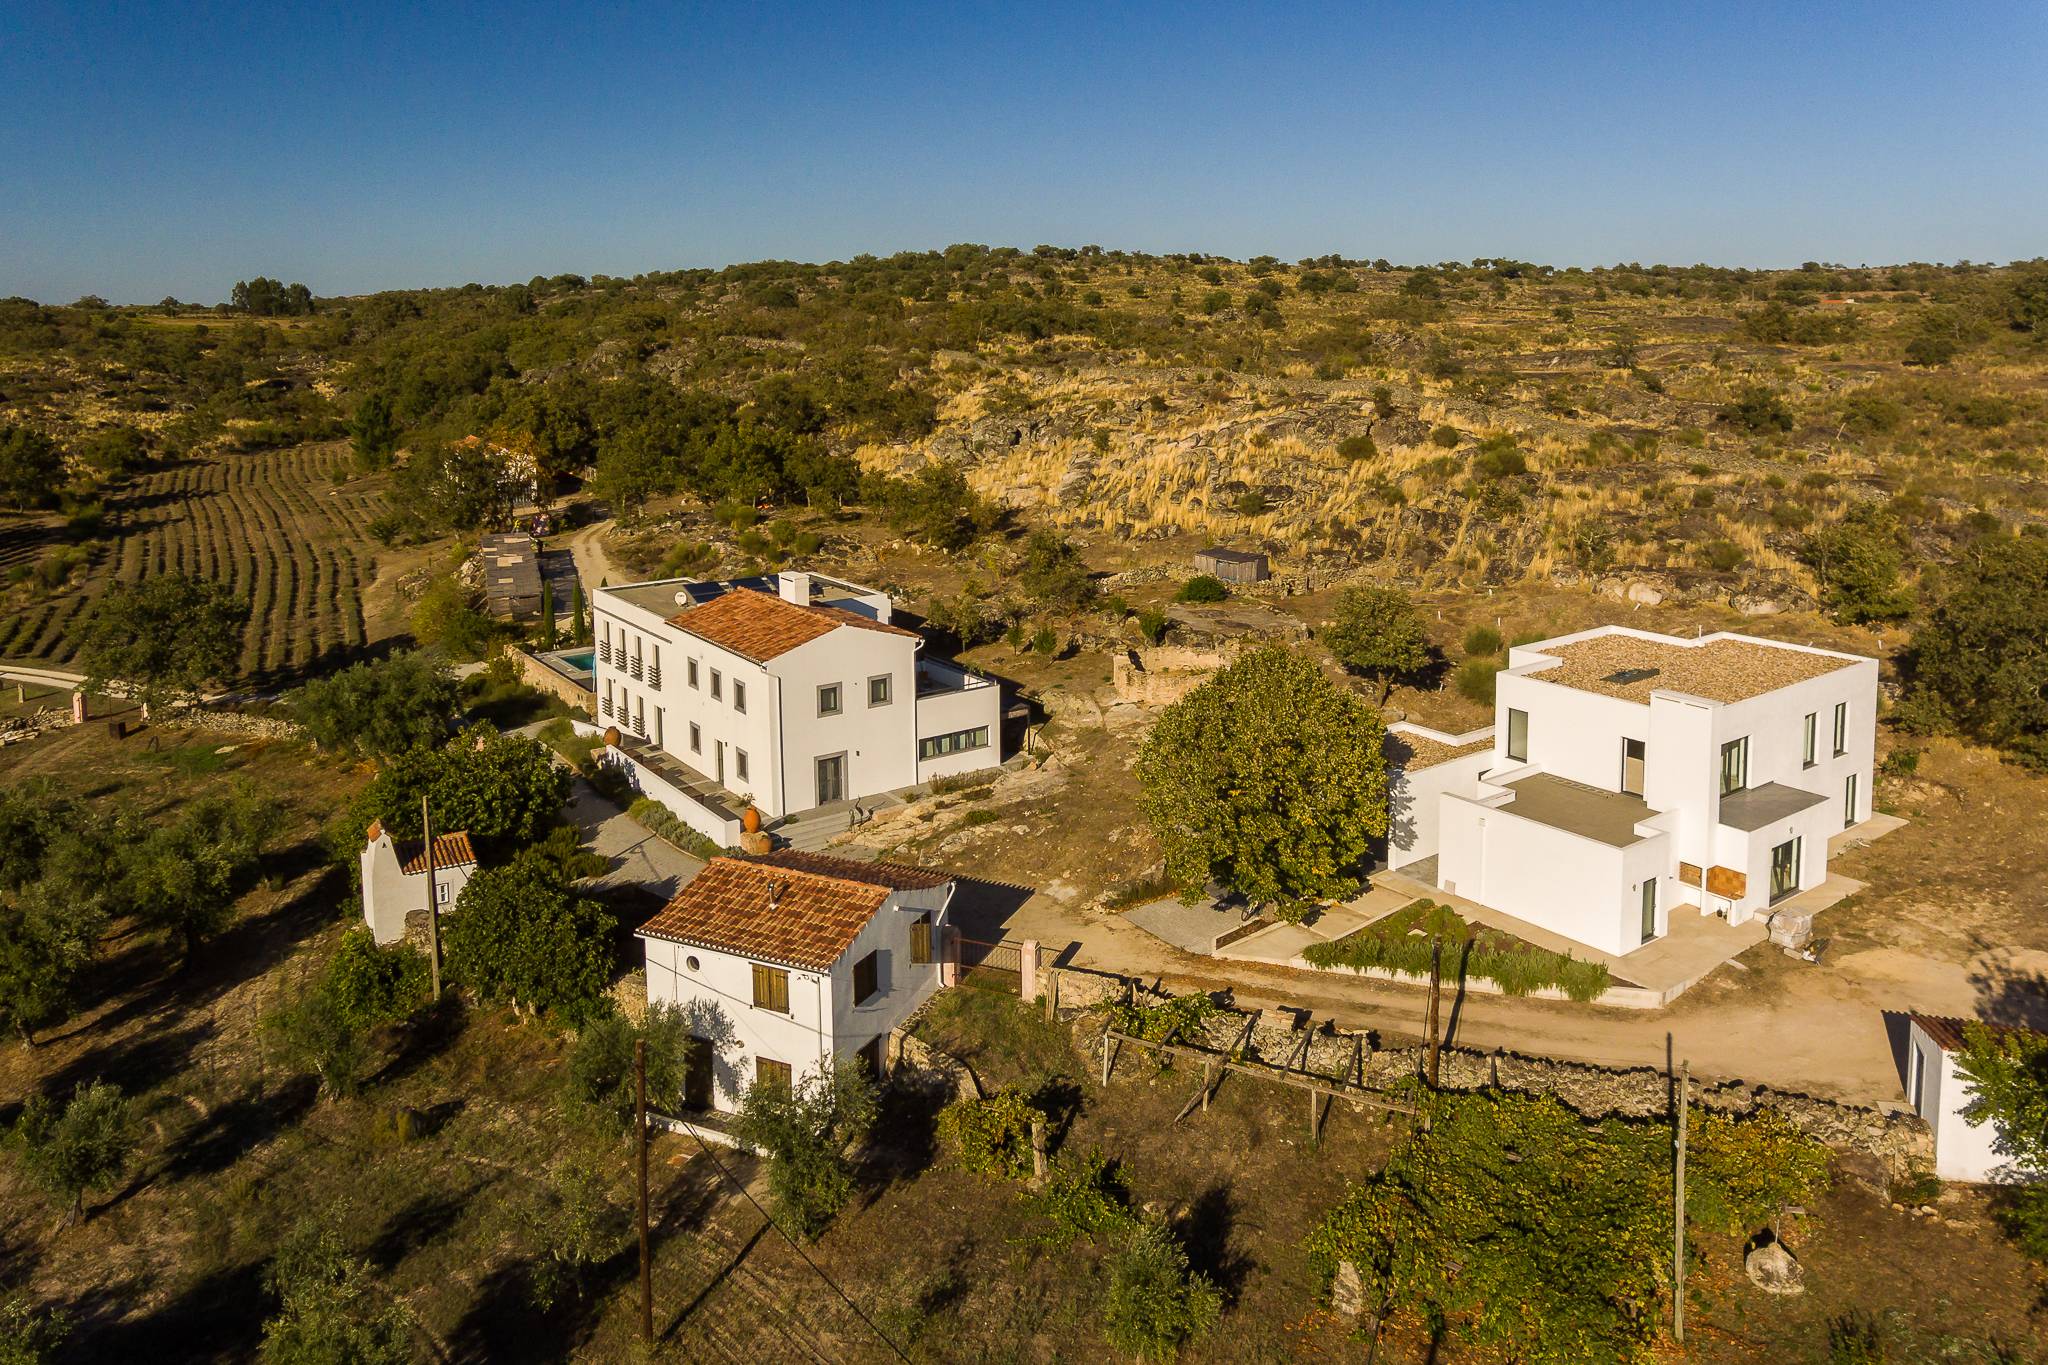 Unique property in the production of lavender in Portugal, located in Castelo de Vide, Alentejo.